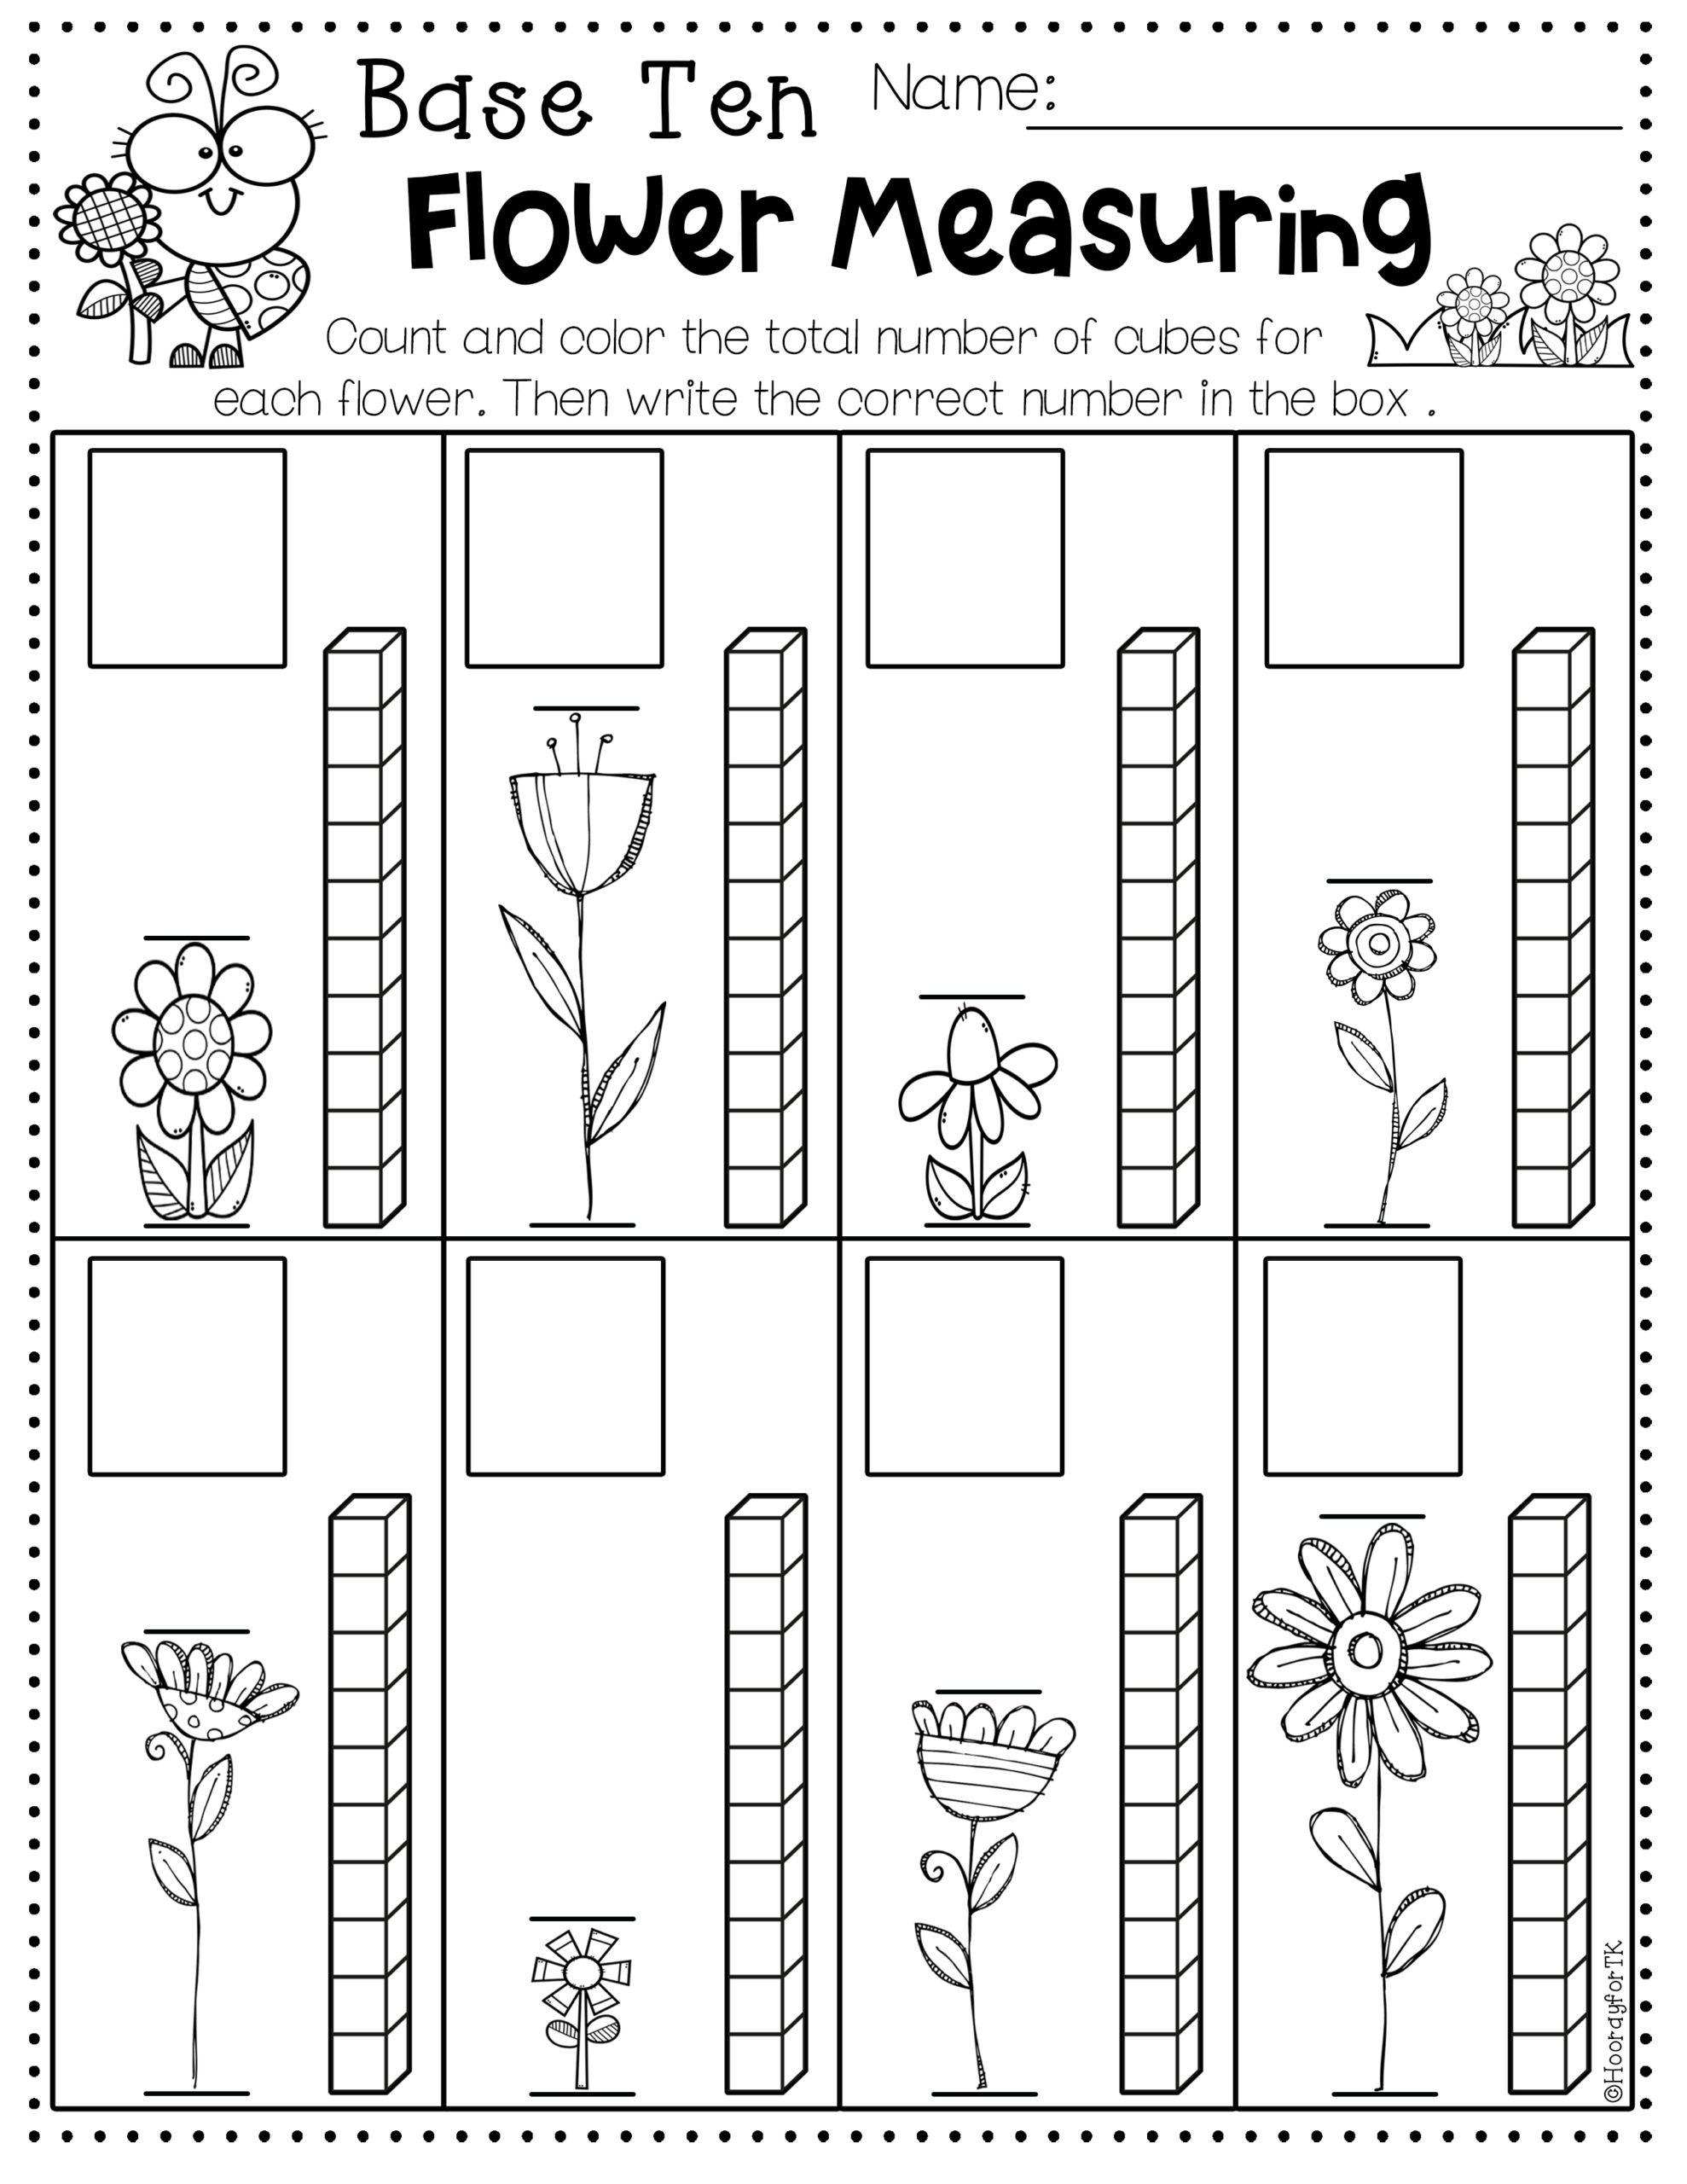 Transitional Kindergarten May Worksheets. Base Ten Flower Measuring Worksheet